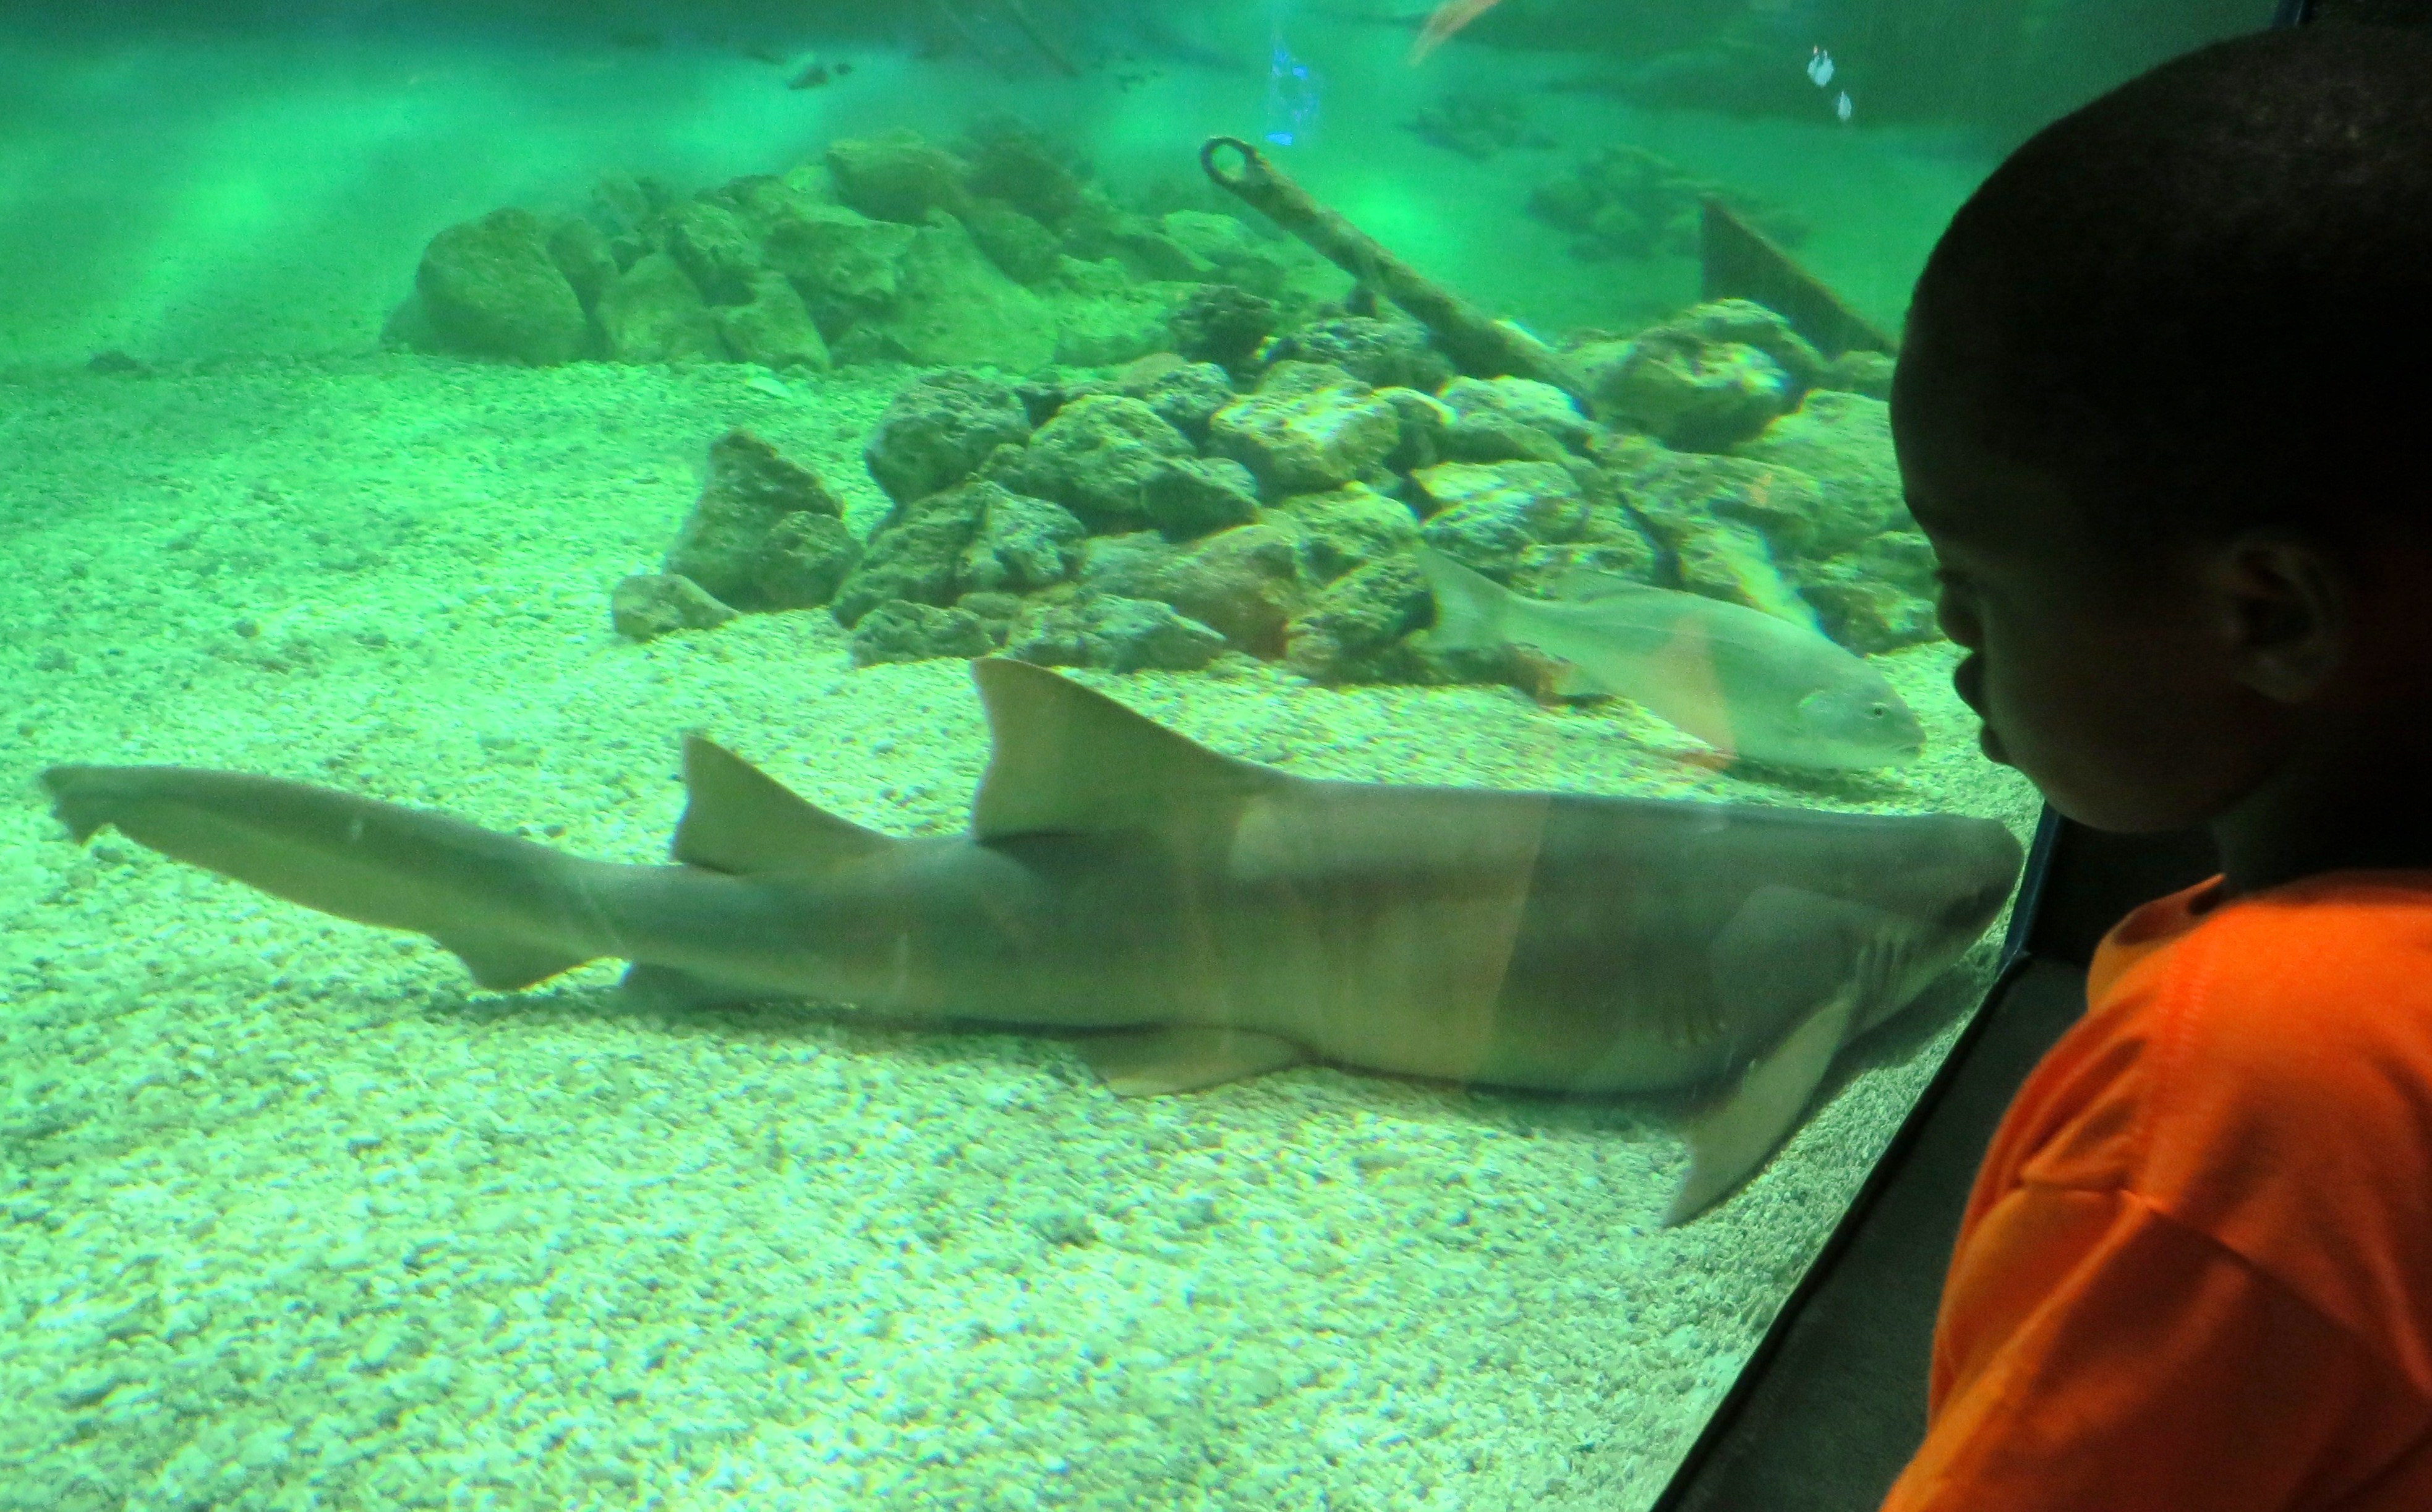 Aquarium trip. SHARON SHERIDAN PHOTO